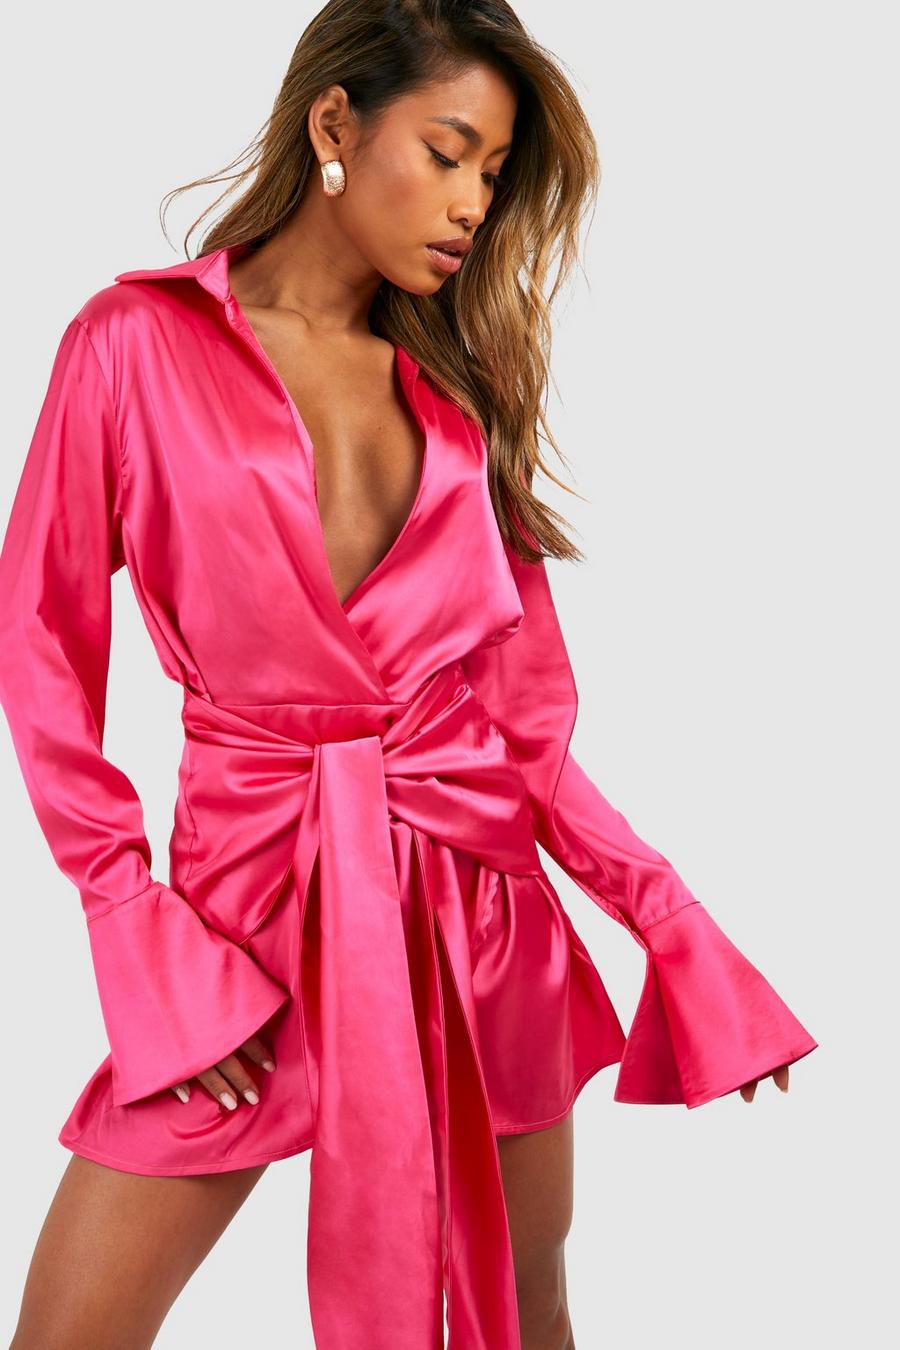 Geschnürtes Satin Hemd-Kleid, Hot pink